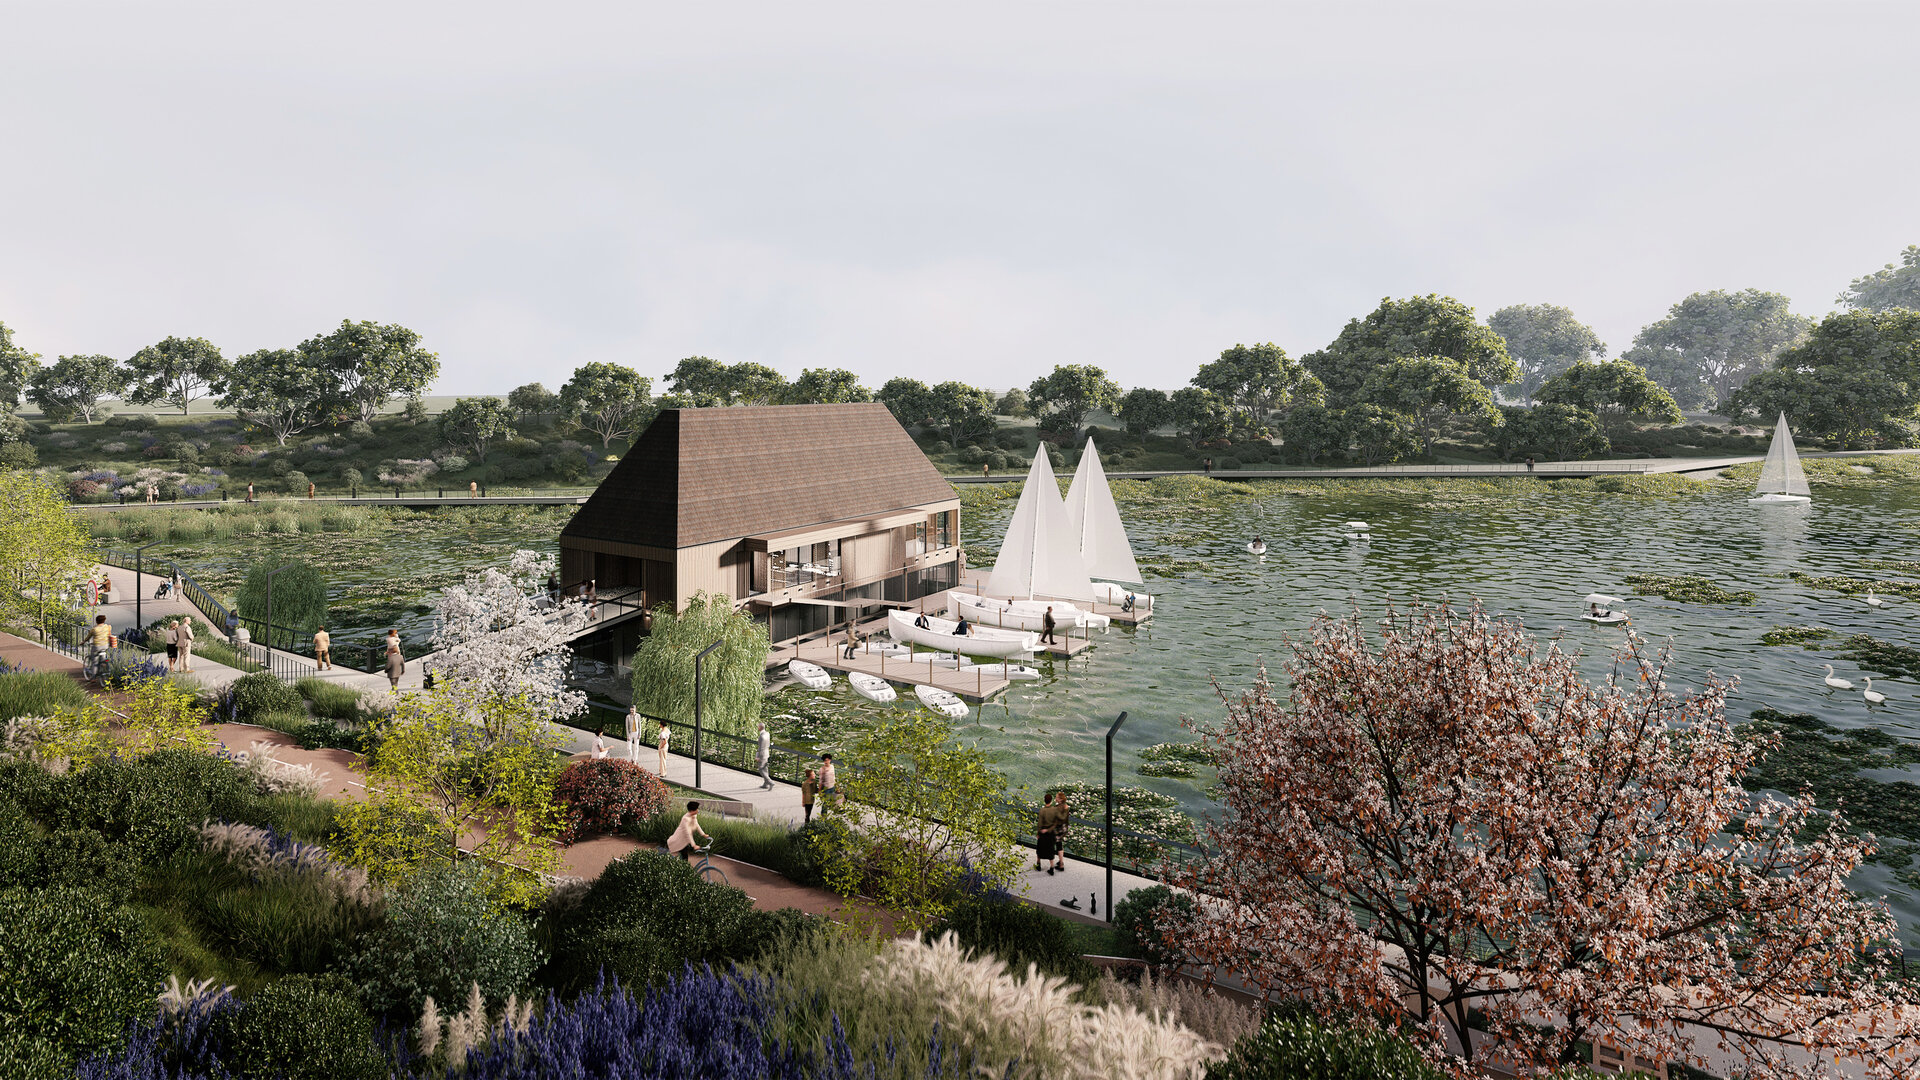 Landscape design by the lake - CUG